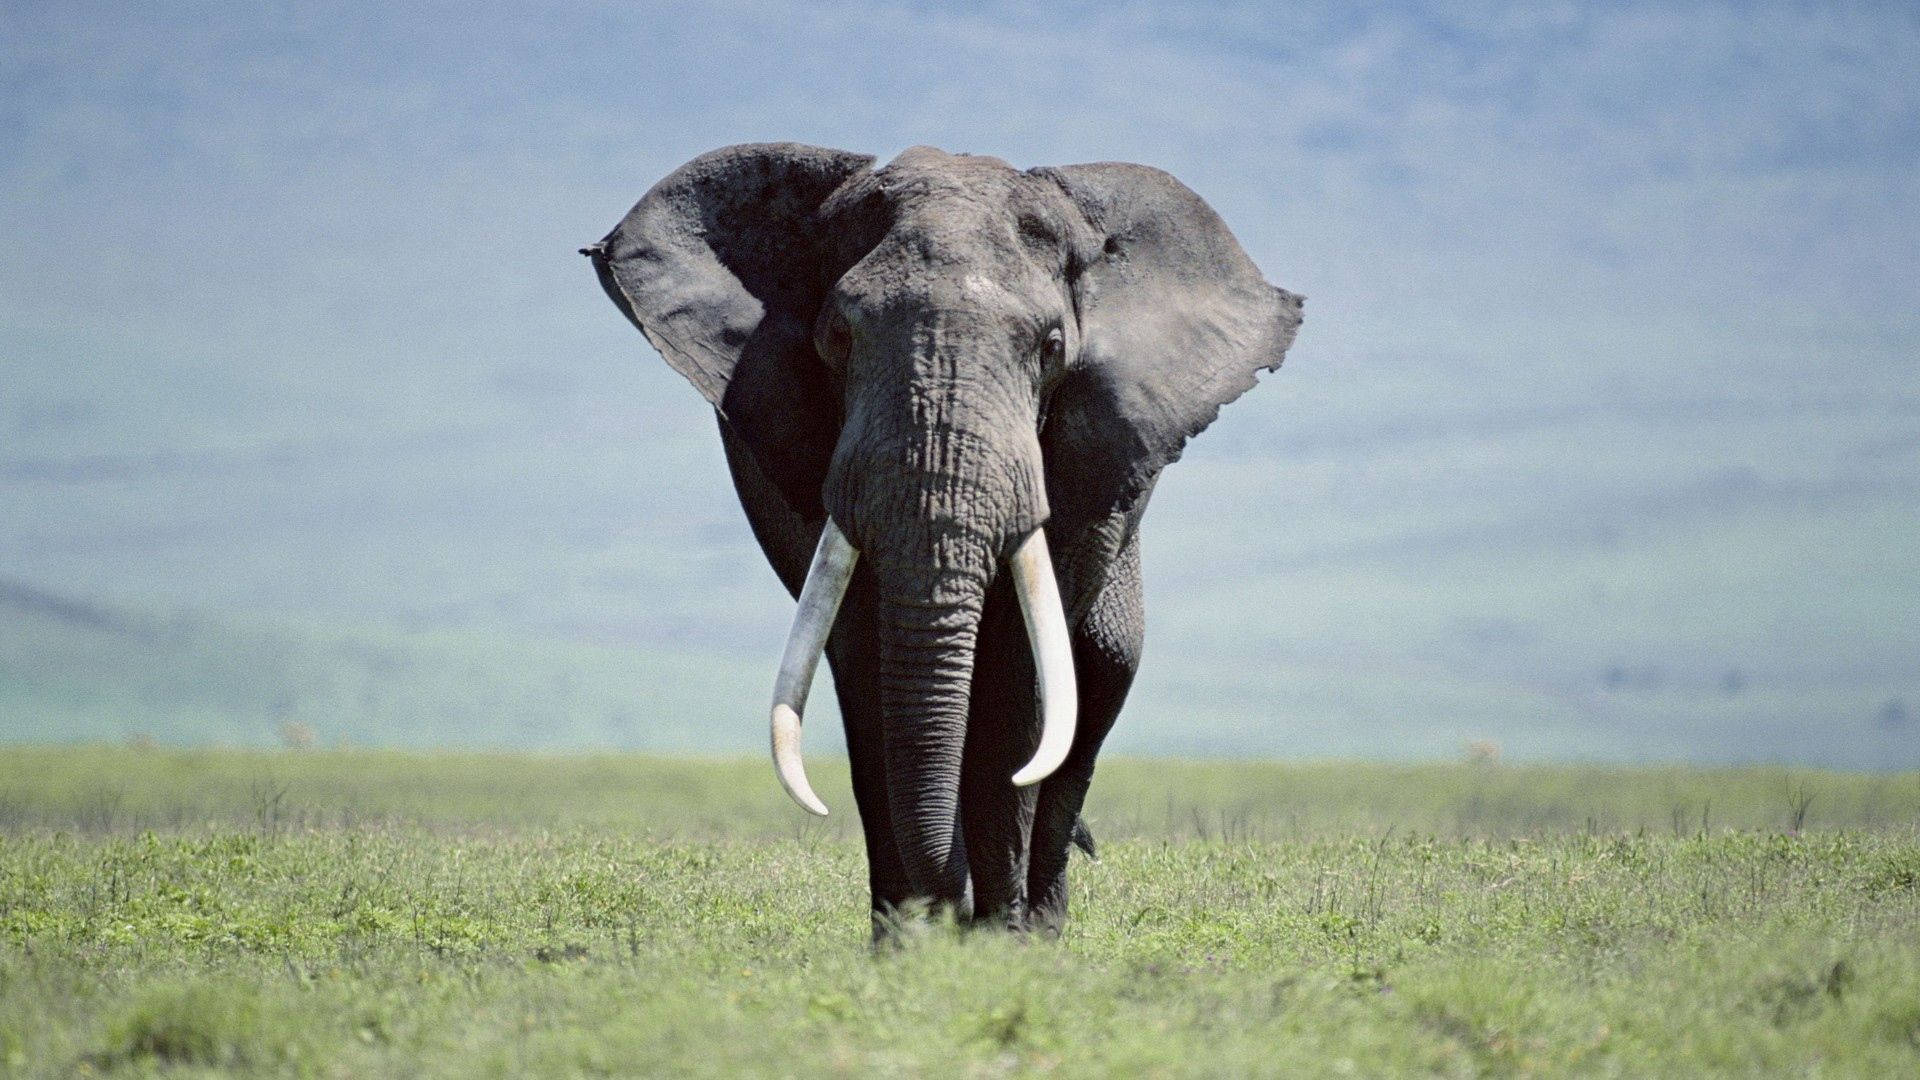 A large elephant quietly enjoys a stroll across a green field. Wallpaper